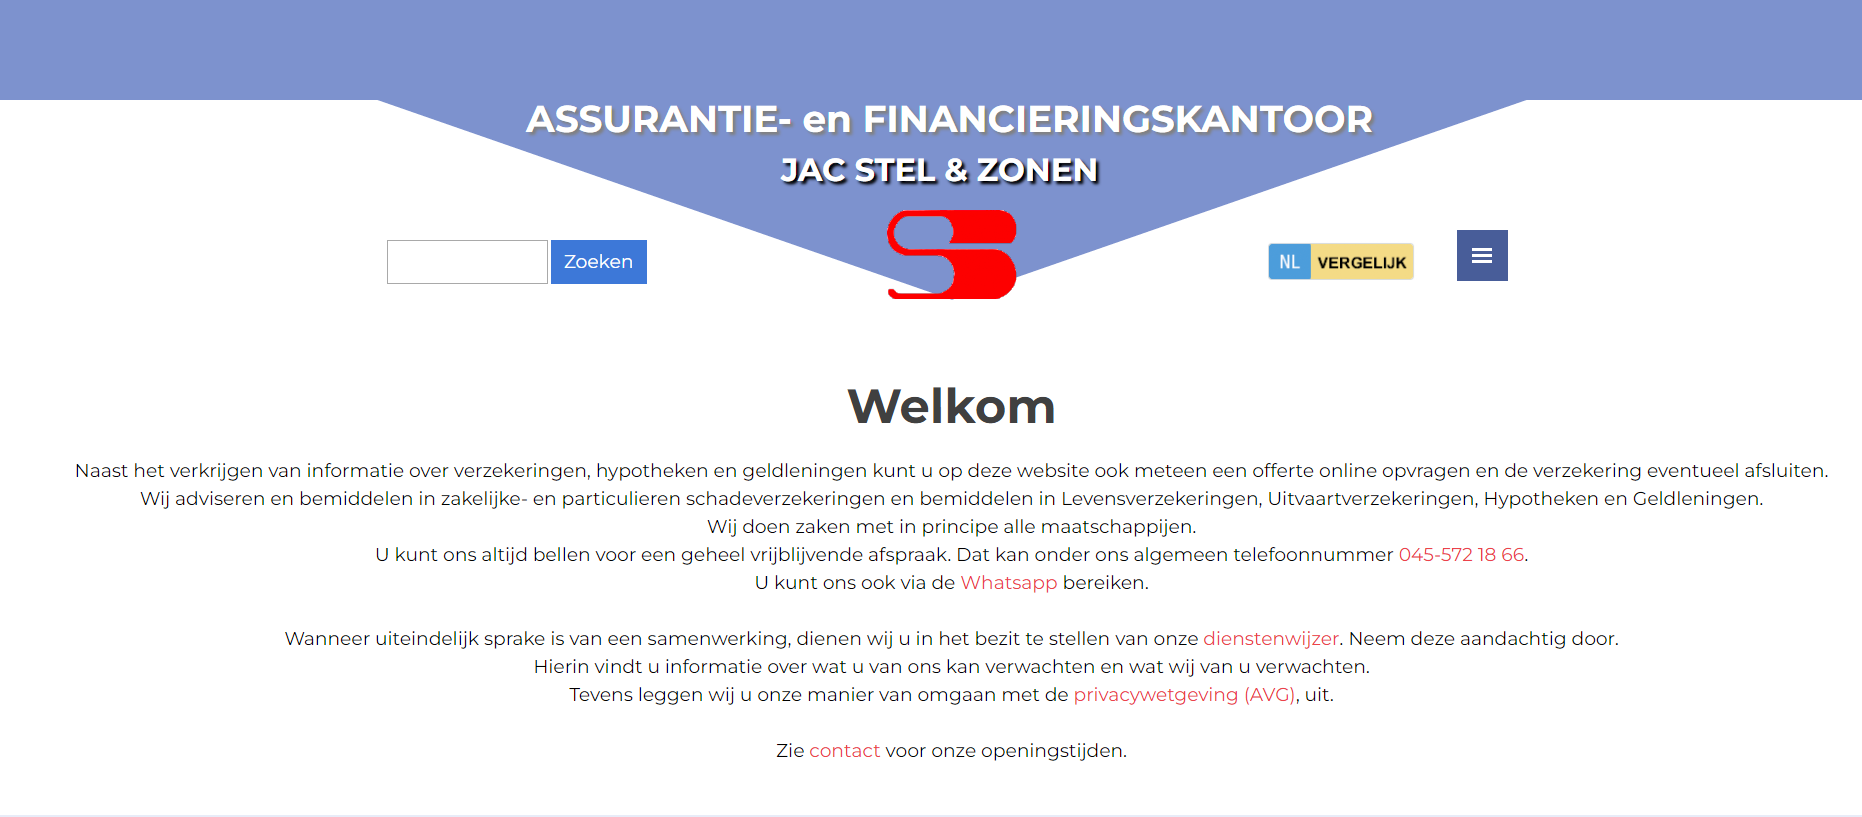 (c) Jacstel.nl